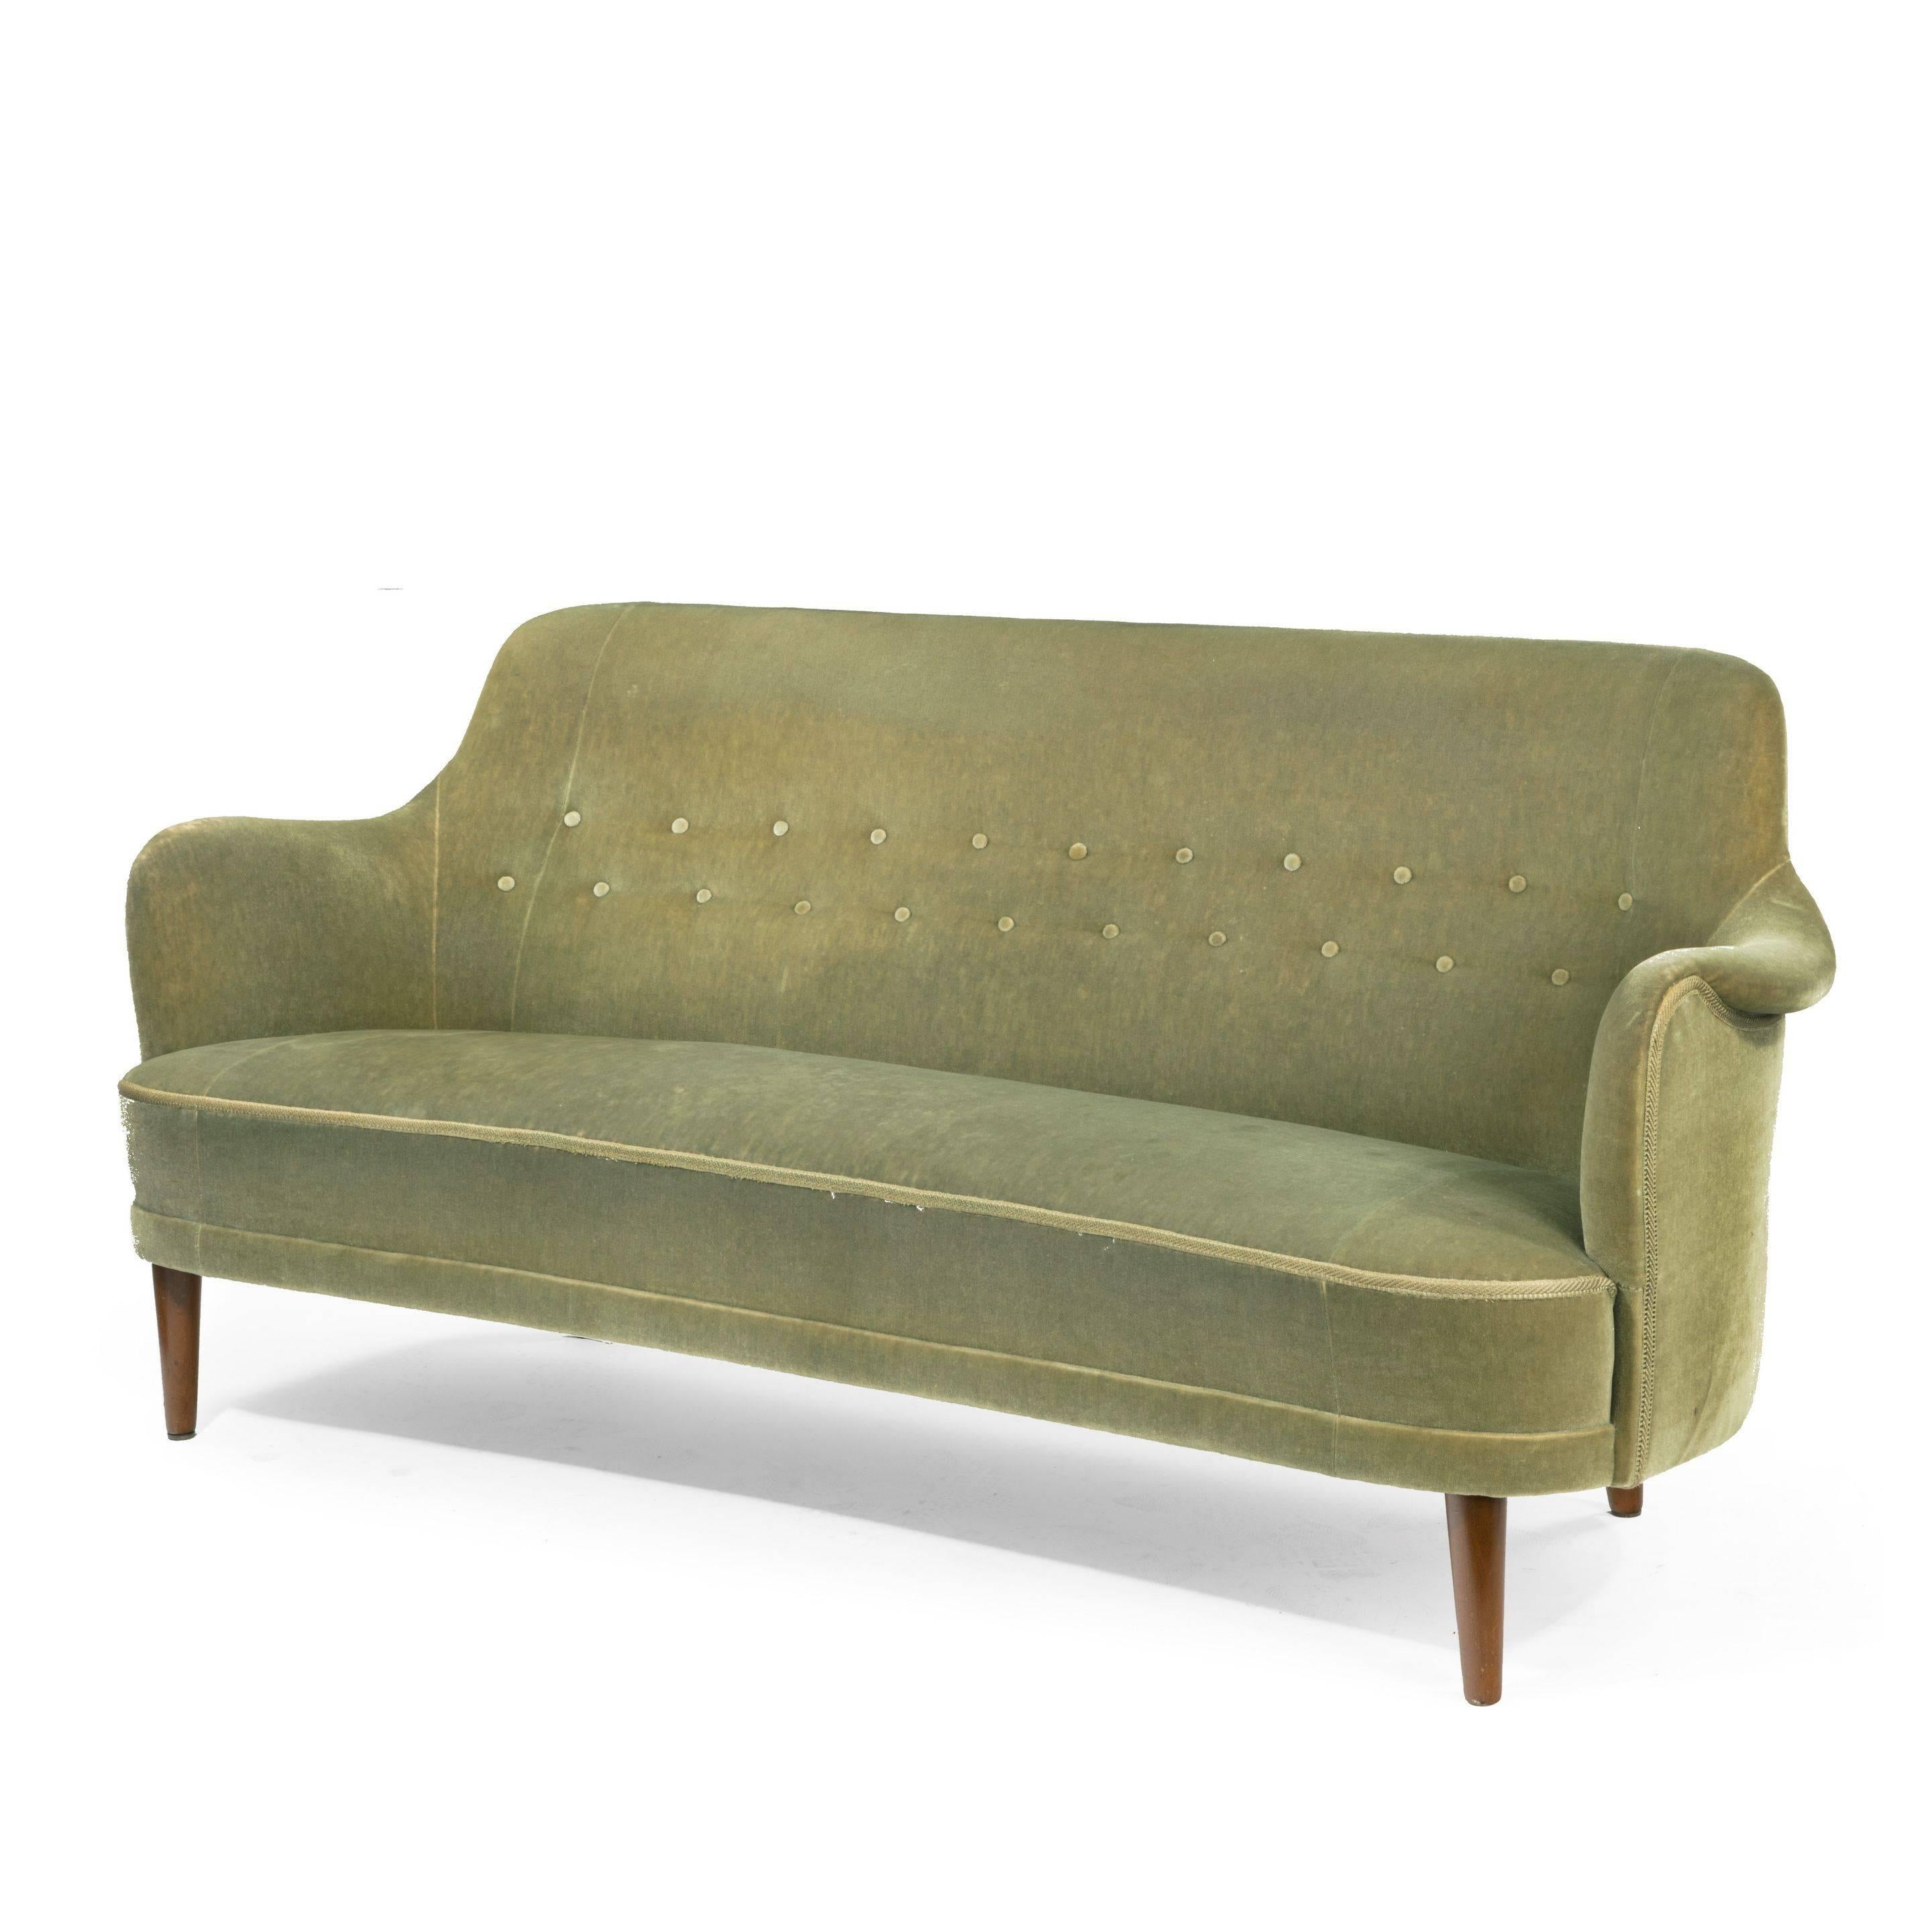 A vintage Carl Malmsten sofa model samsas, circa 1950 (makers label) original fabric.